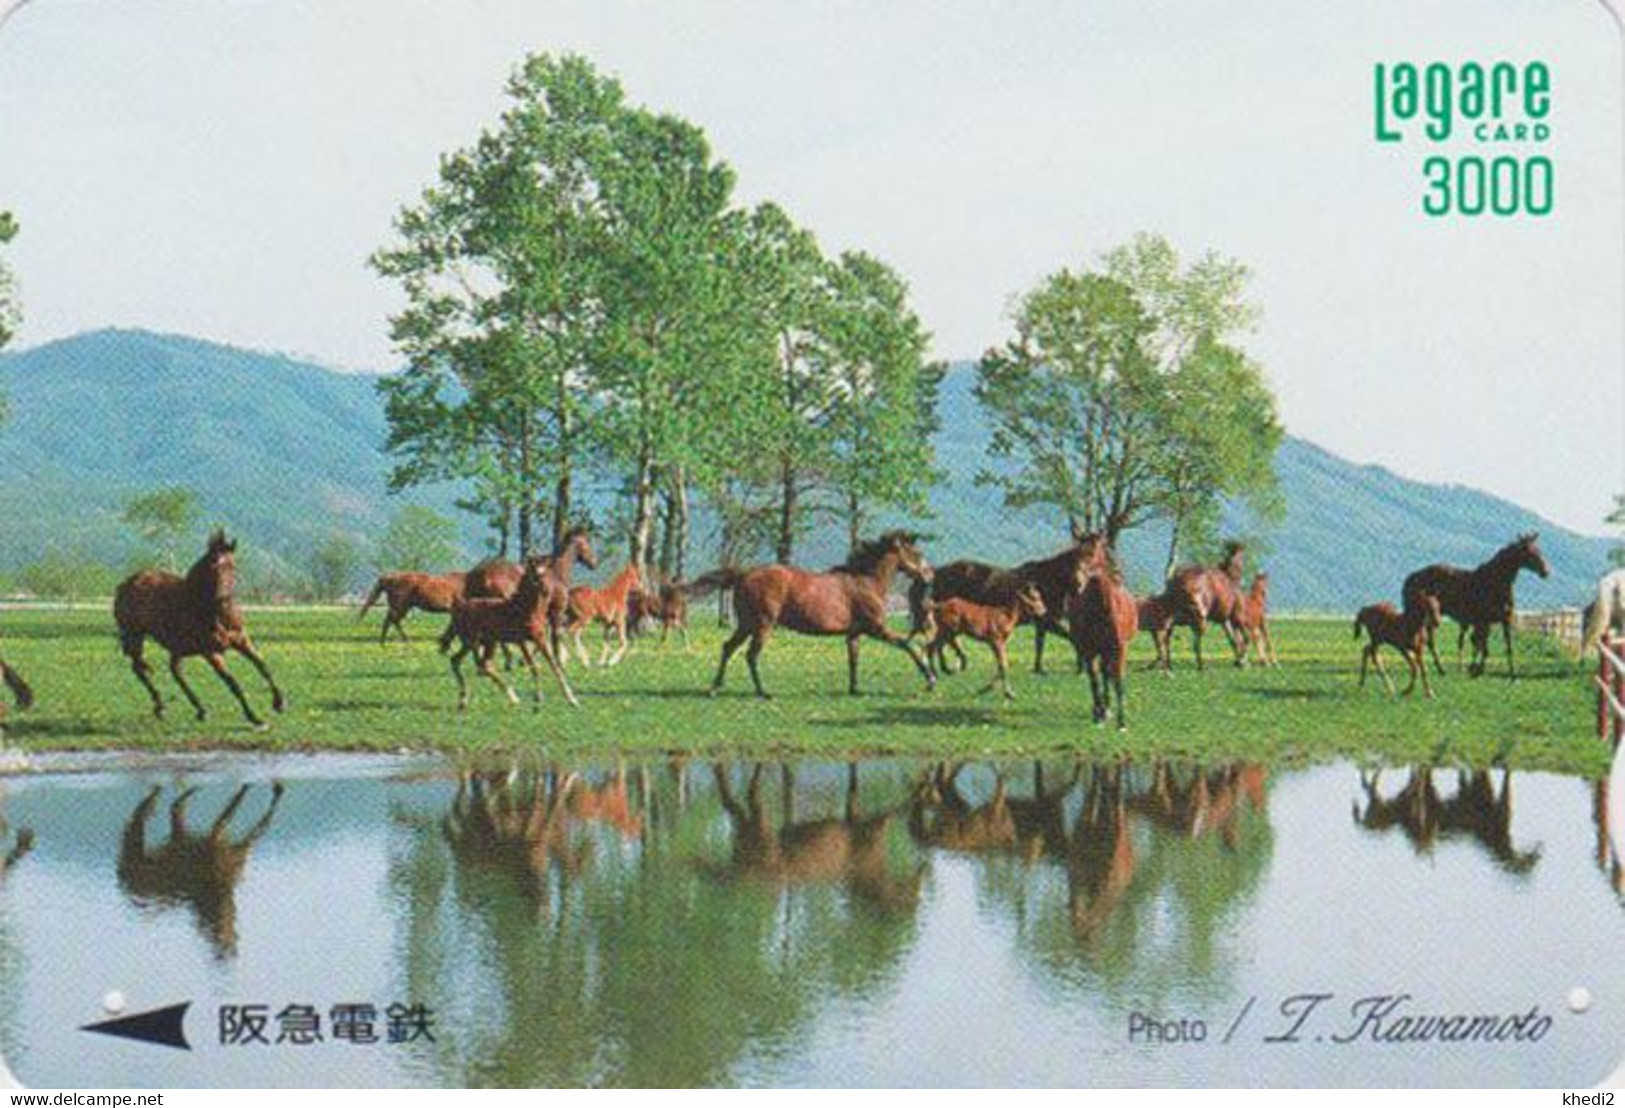 Carte Prépayée JAPON - ANIMAL - CHEVAL Chevaux - HORSE JAPAN Prepaid Kansai Lagare Ticket Card - 393 - Chevaux